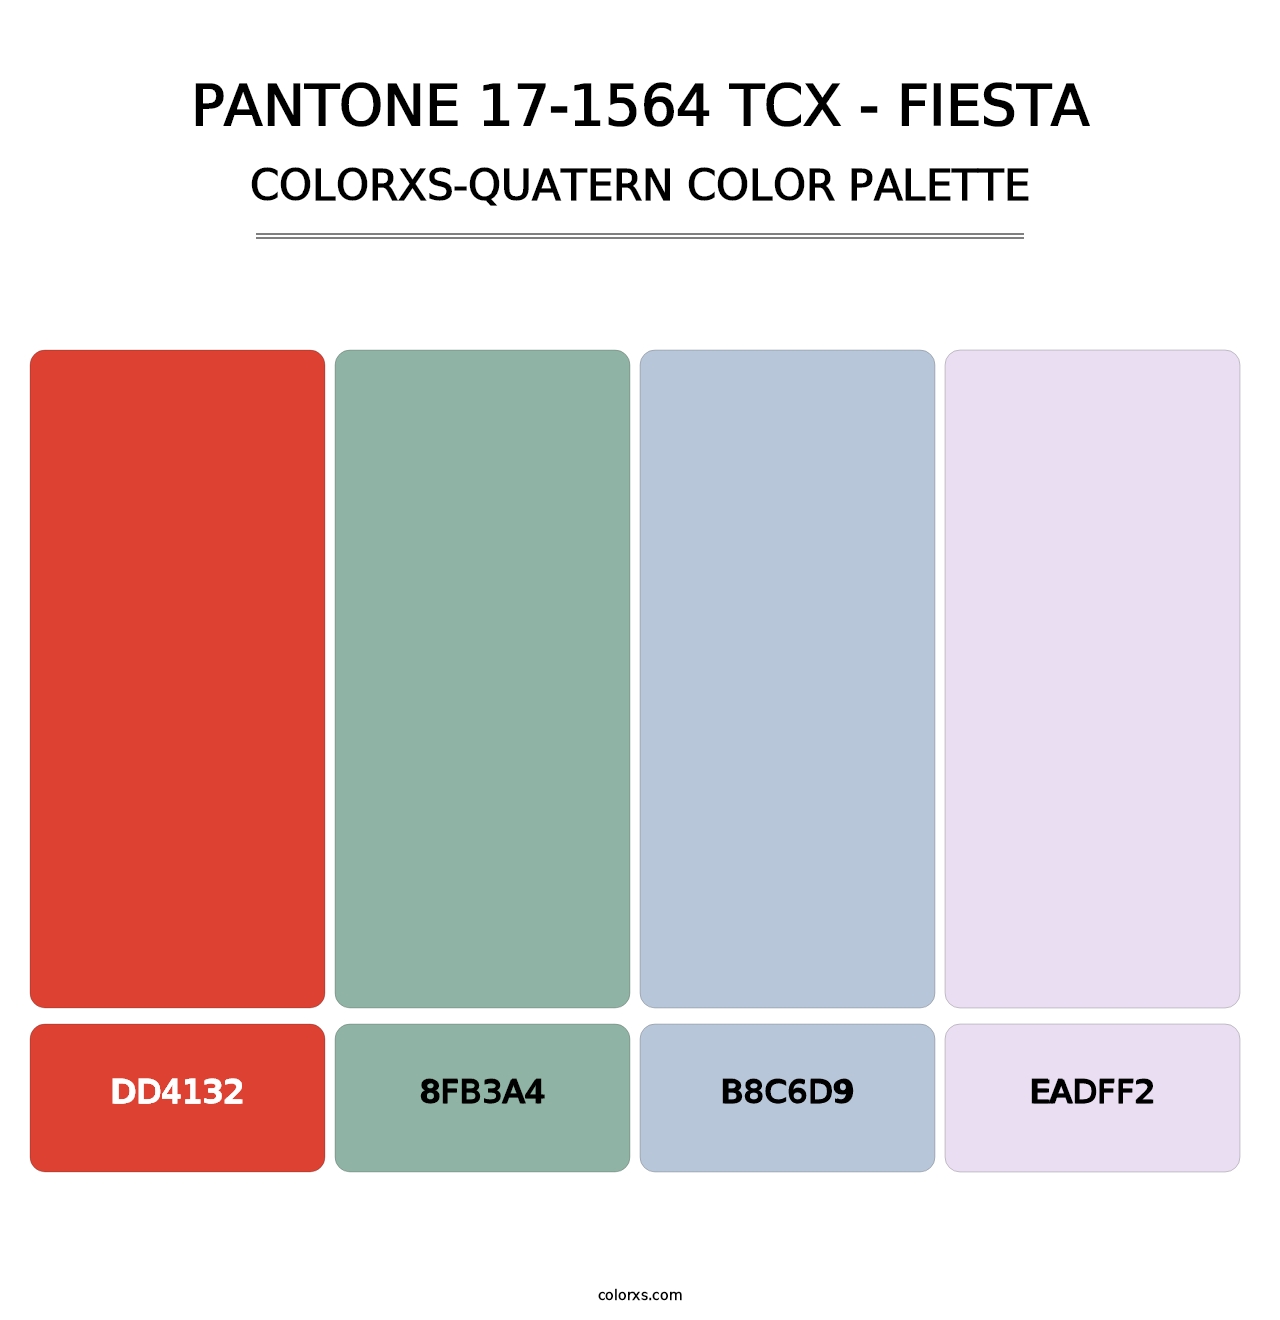 PANTONE 17-1564 TCX - Fiesta - Colorxs Quatern Palette